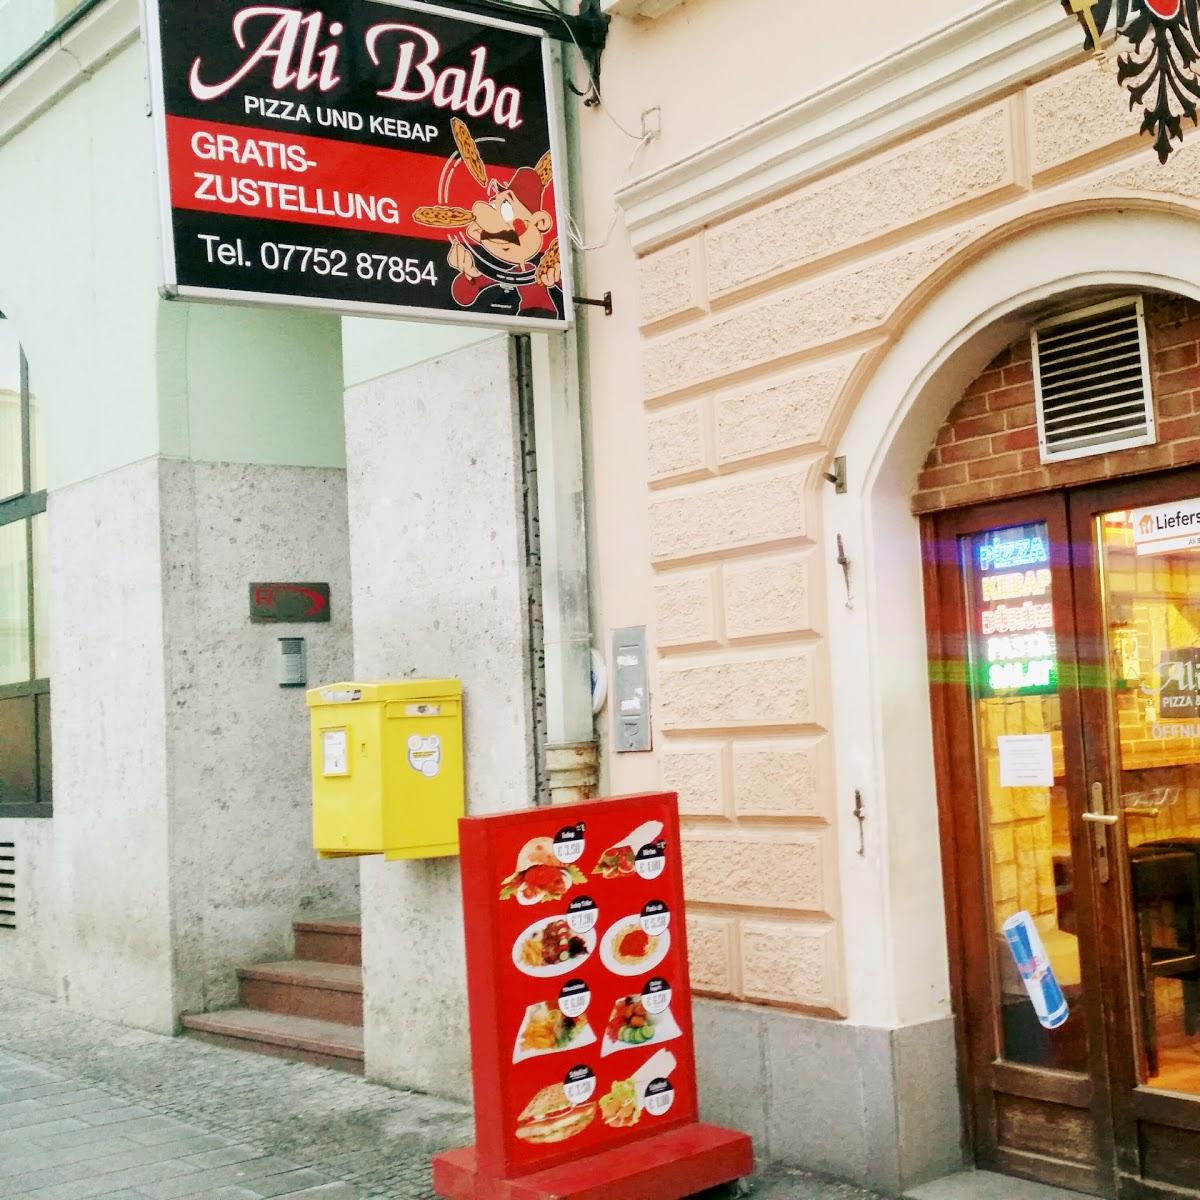 Restaurant "Ali Baba